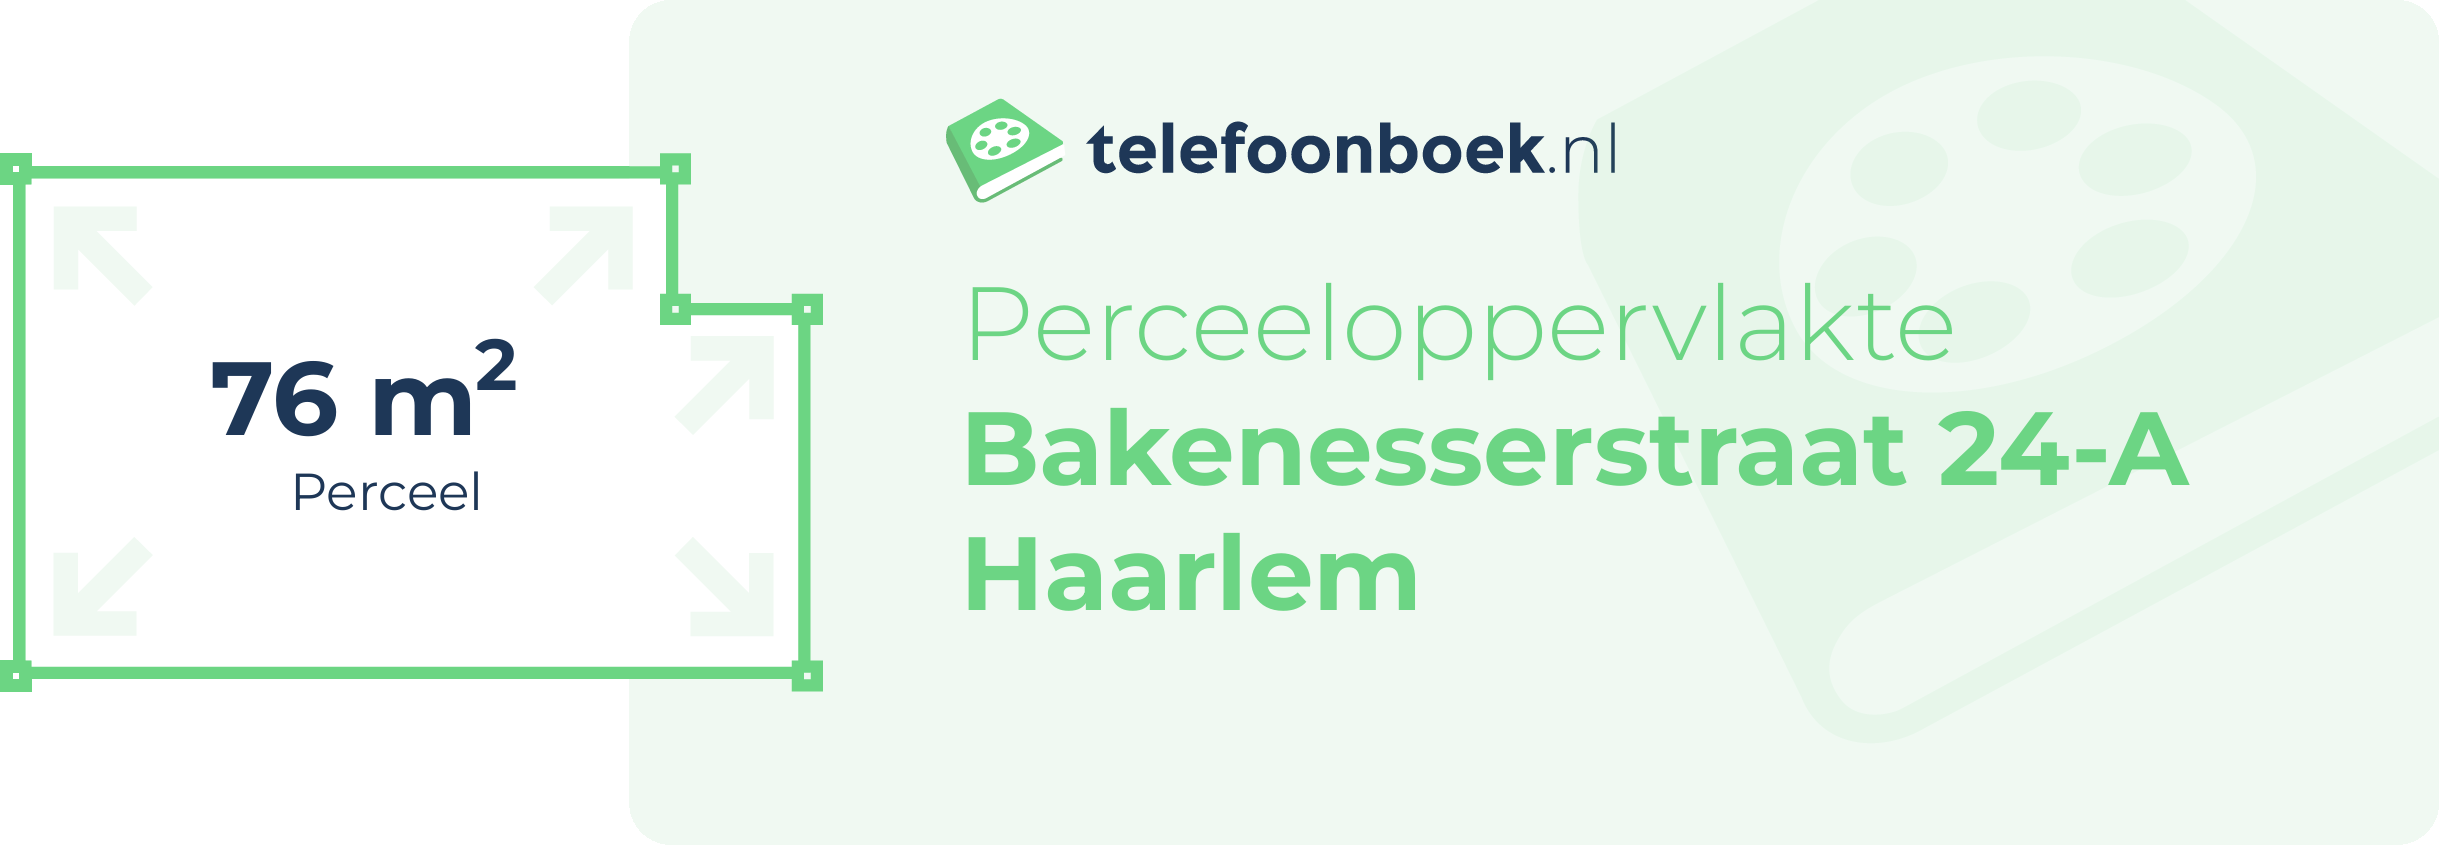 Perceeloppervlakte Bakenesserstraat 24-A Haarlem